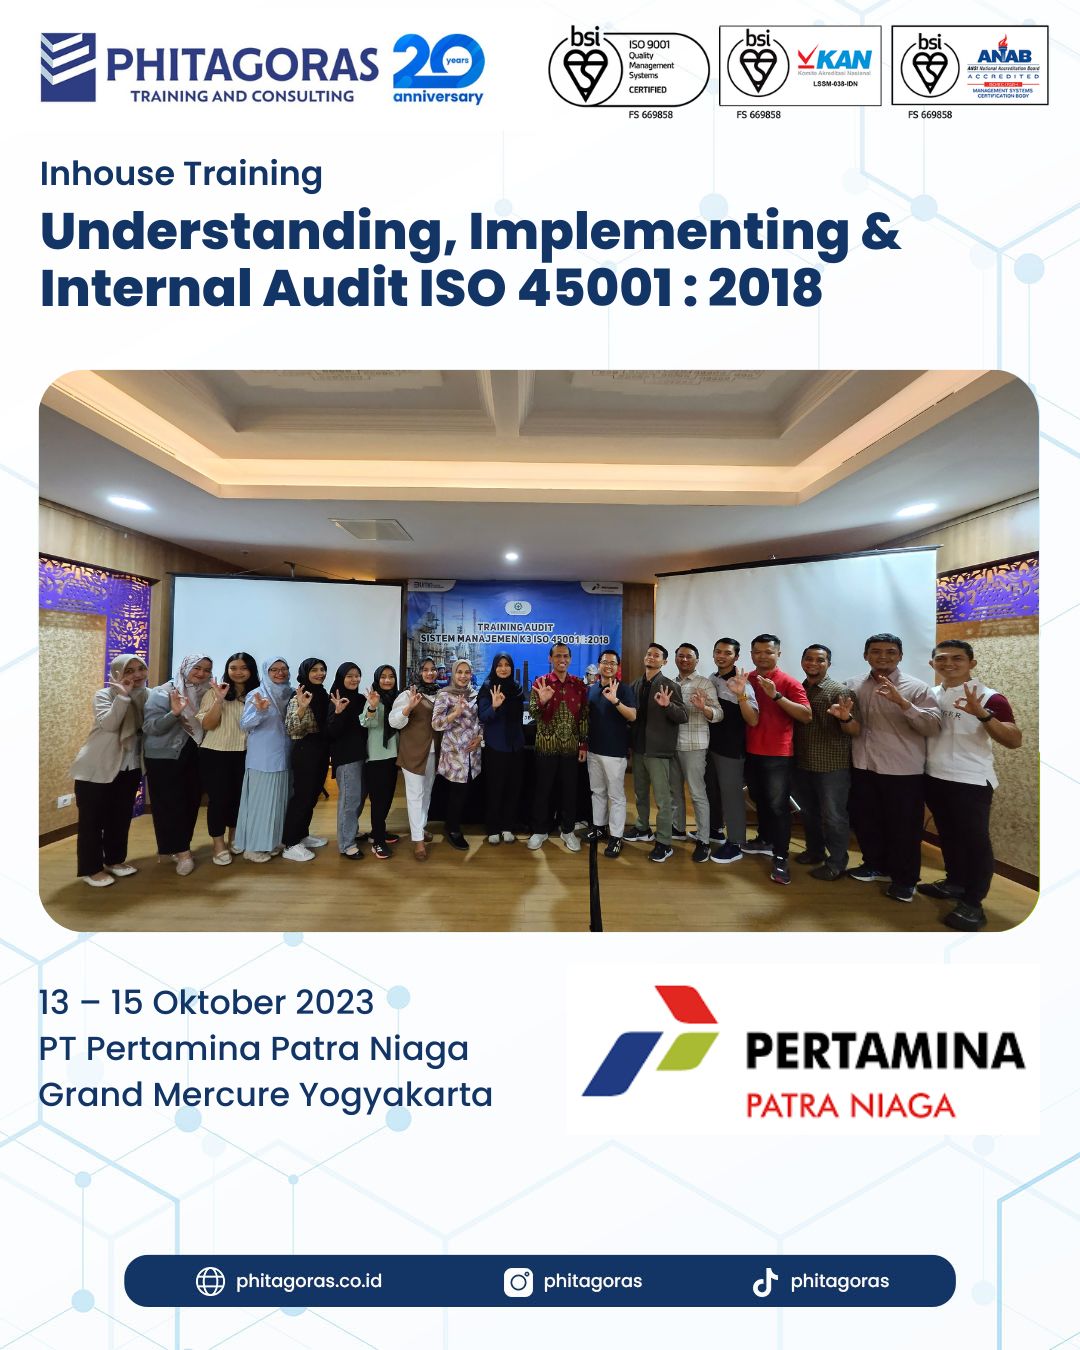 Inhouse Training Understanding, Implementing & Internal Audit ISO 45001:2018 - PT Pertamina Patra Niaga